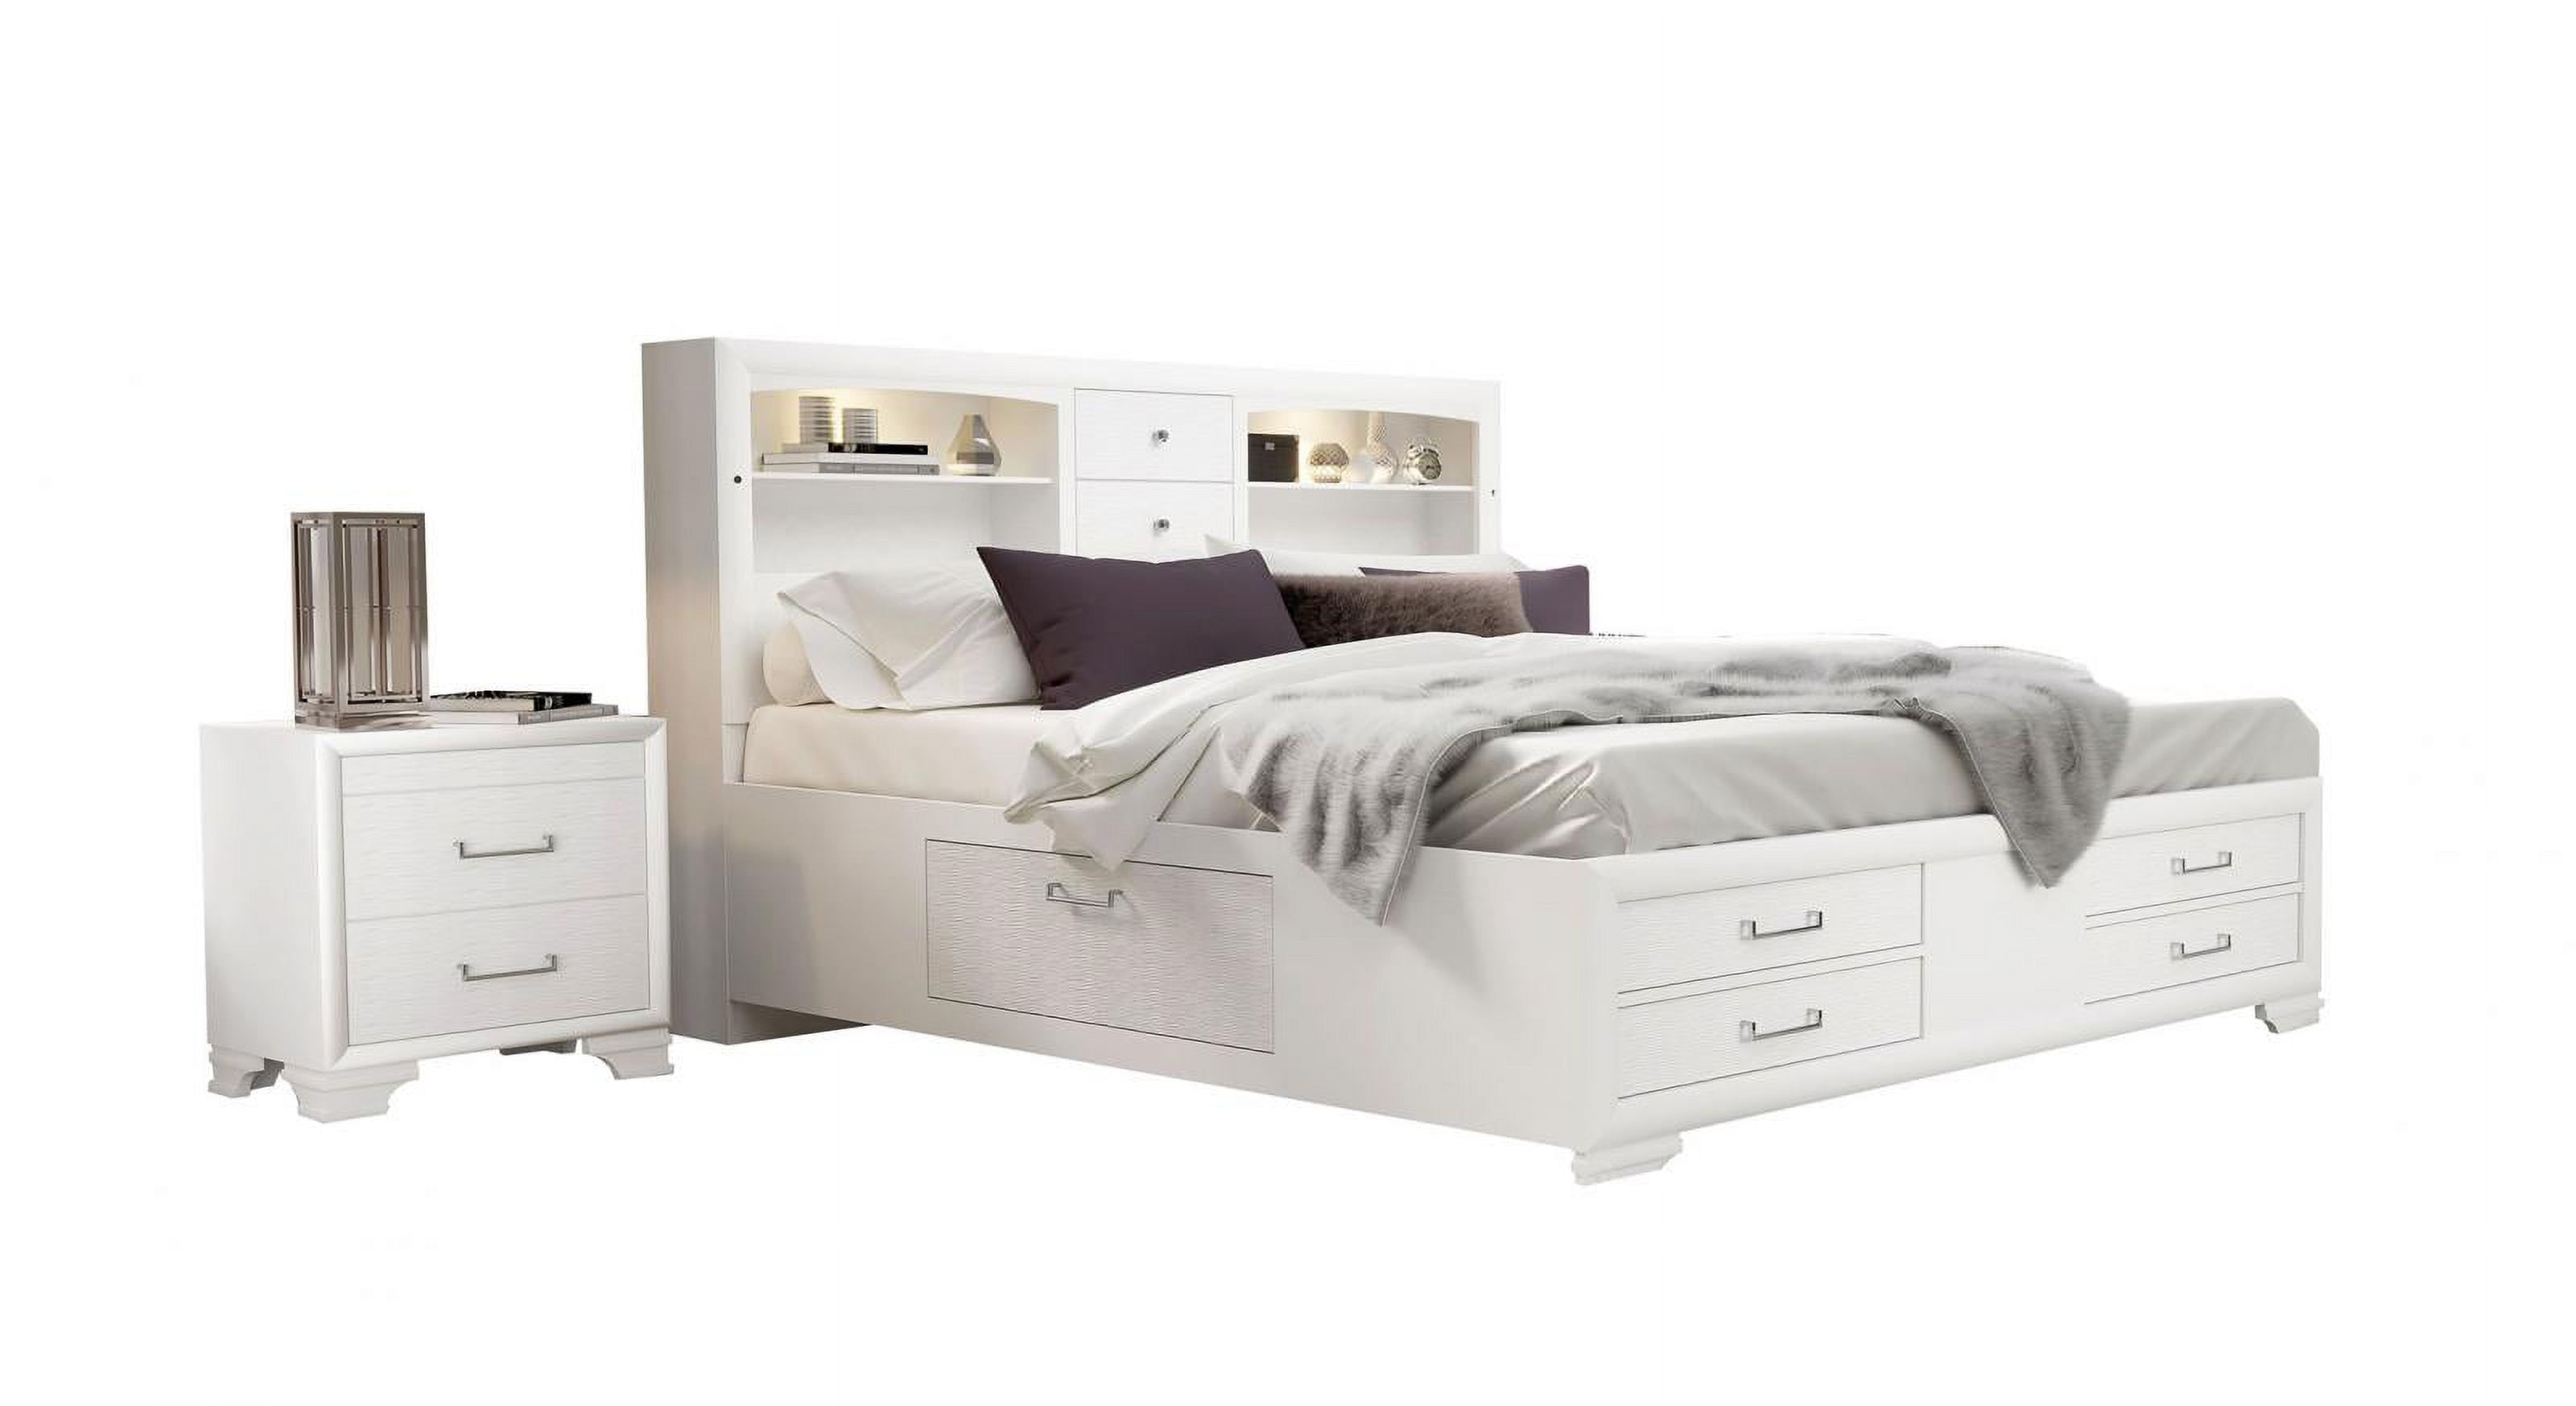 Storage Queen Bed & 2 Nightstands Glossy White Modern Global Furniture Jordyn - image 1 of 6